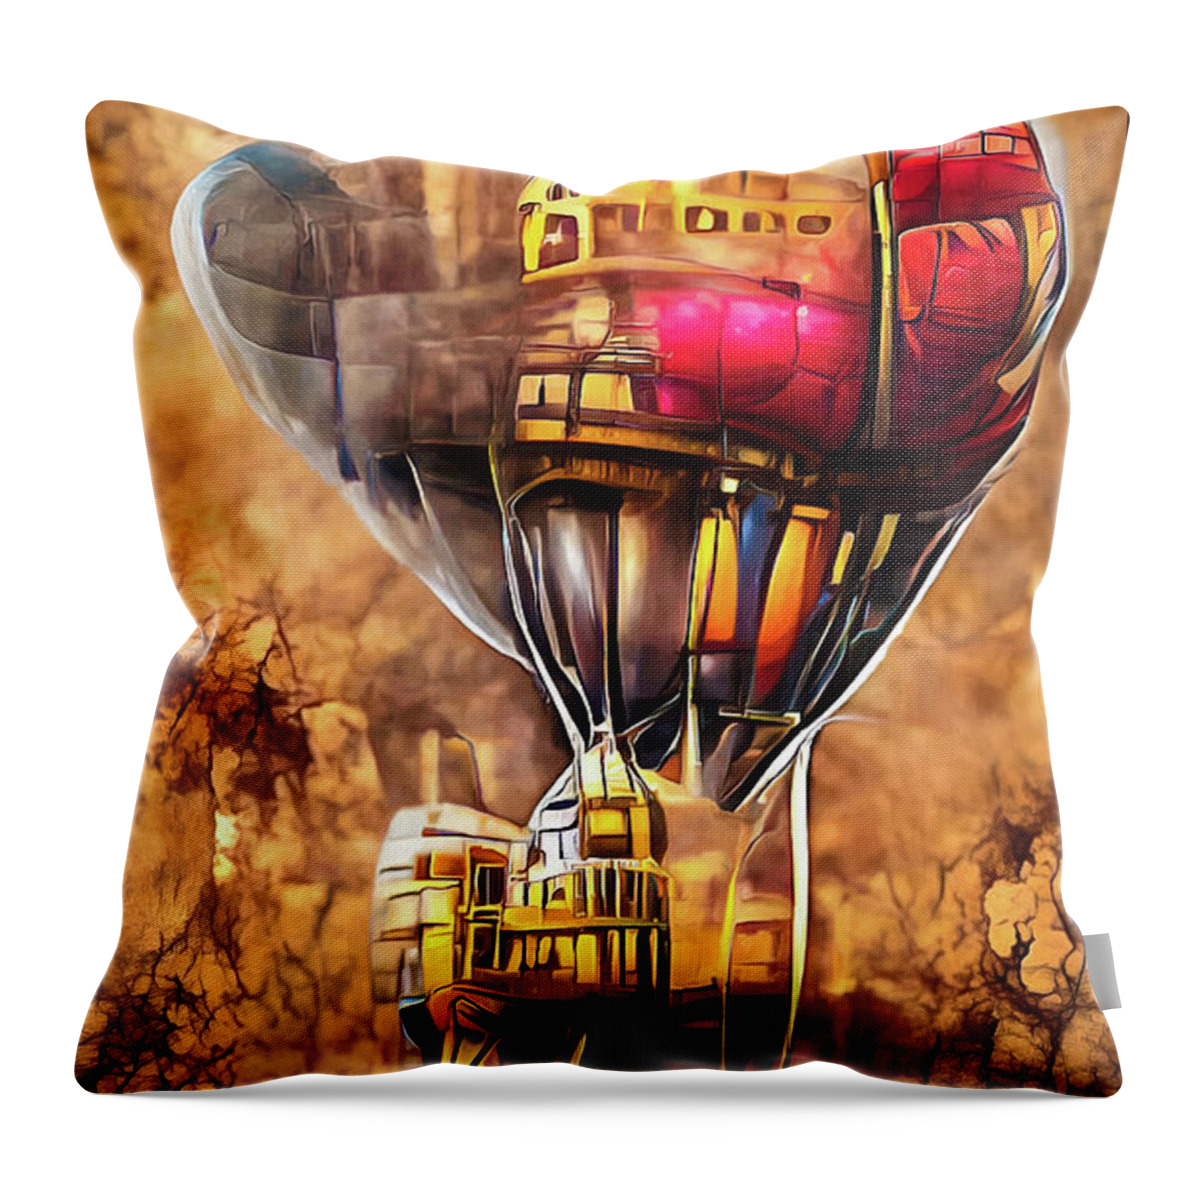 Steampunk Throw Pillow featuring the digital art Steampunk Transportation 01 Hot-Air Balloon by Matthias Hauser